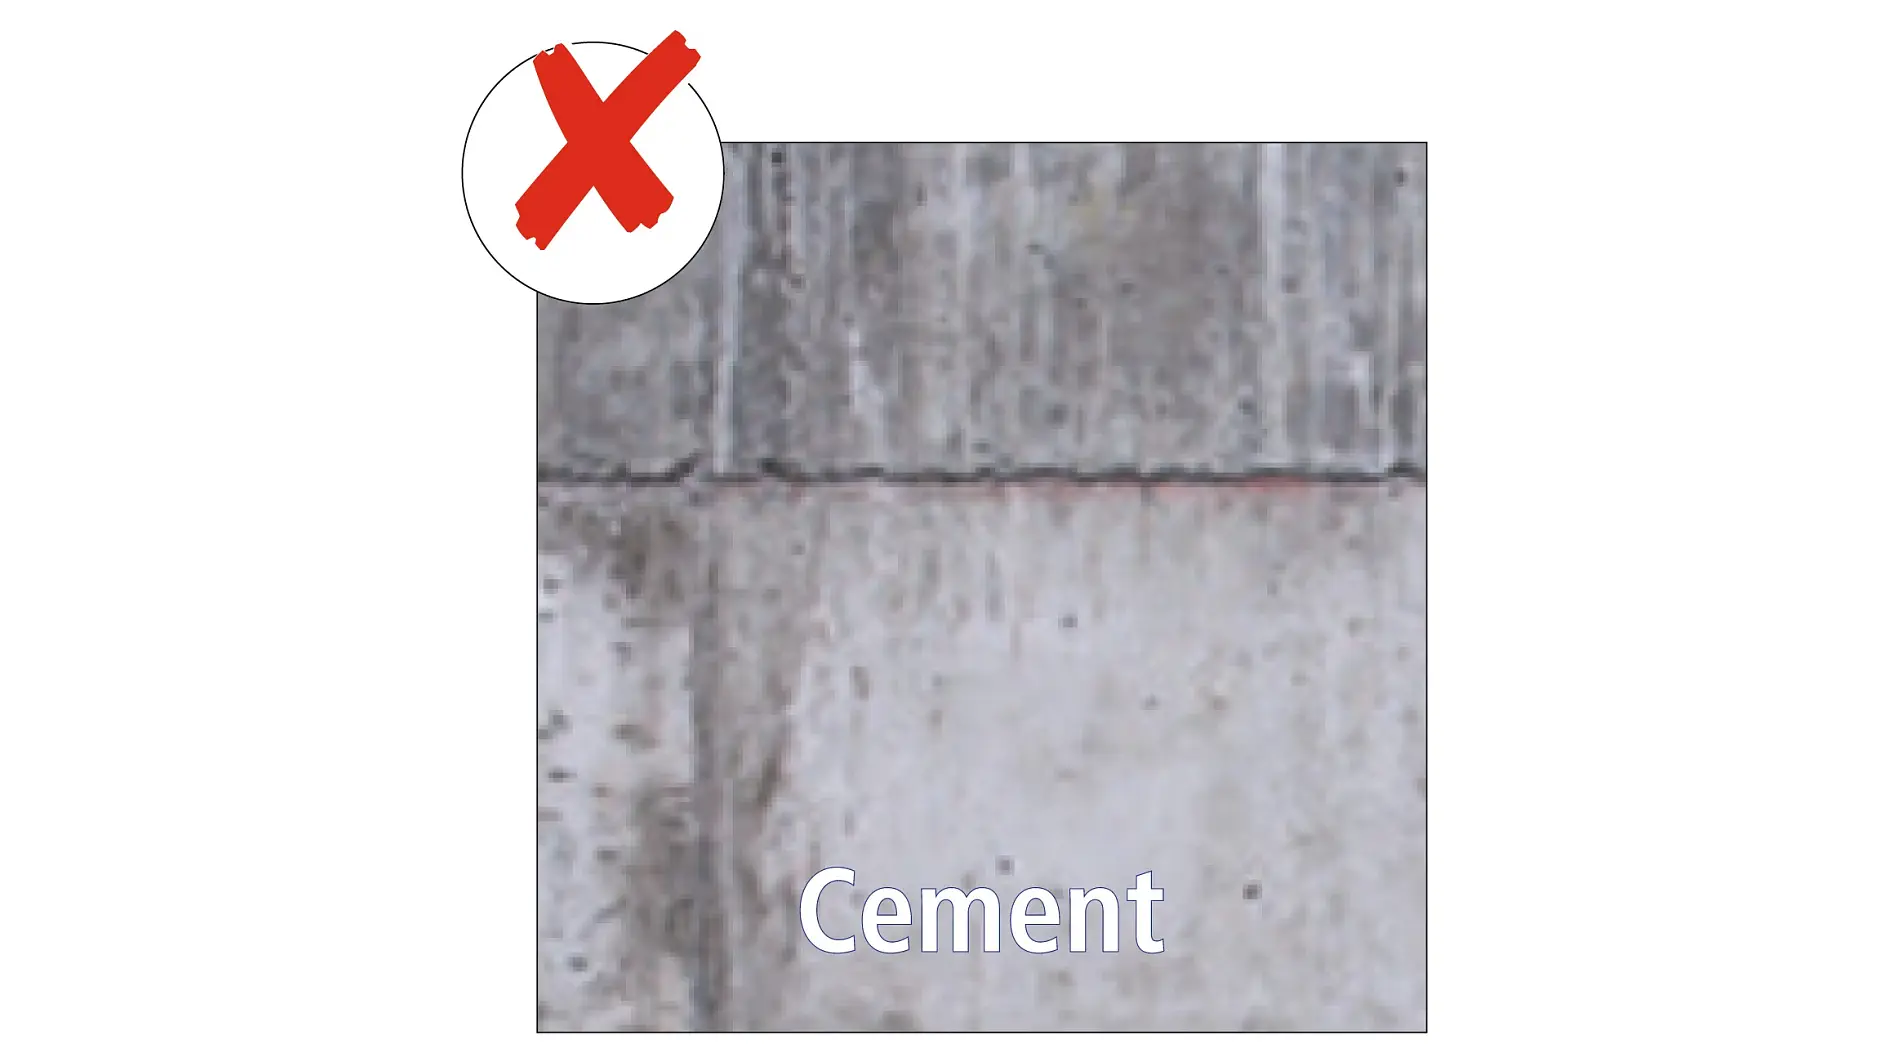 Zement